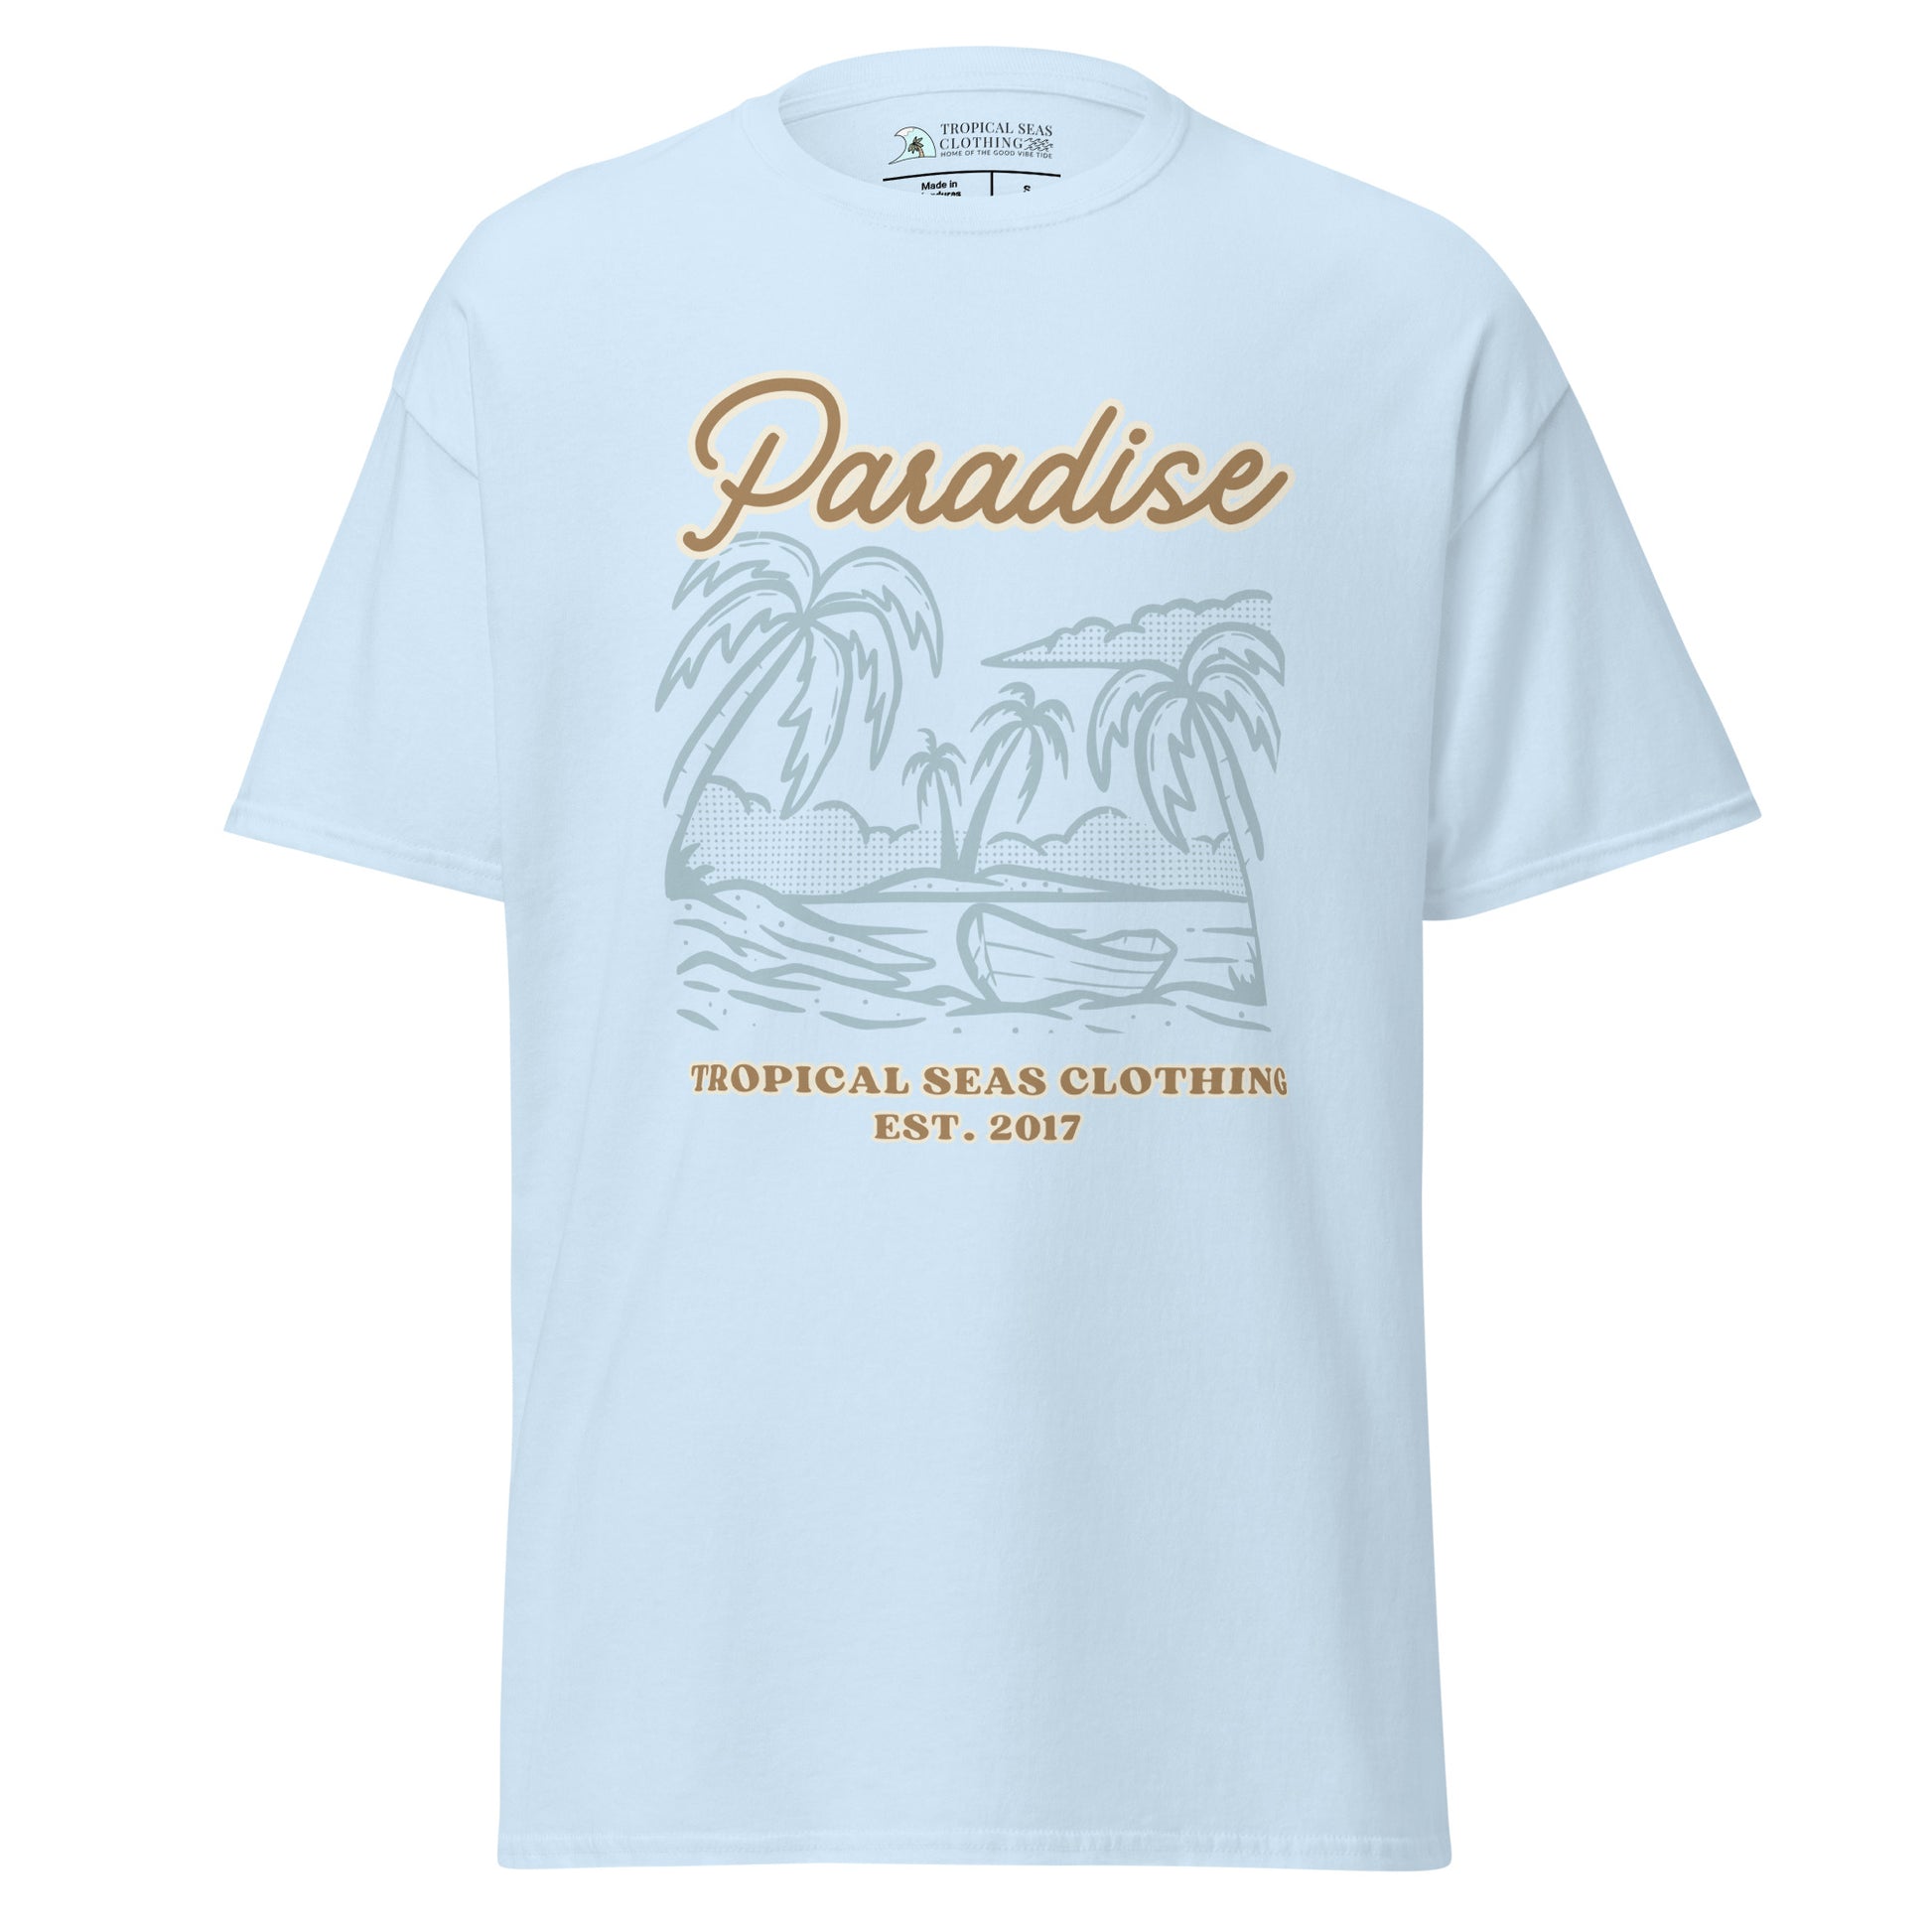 Island Paradise Classic Tee - Tropical Seas Clothing 